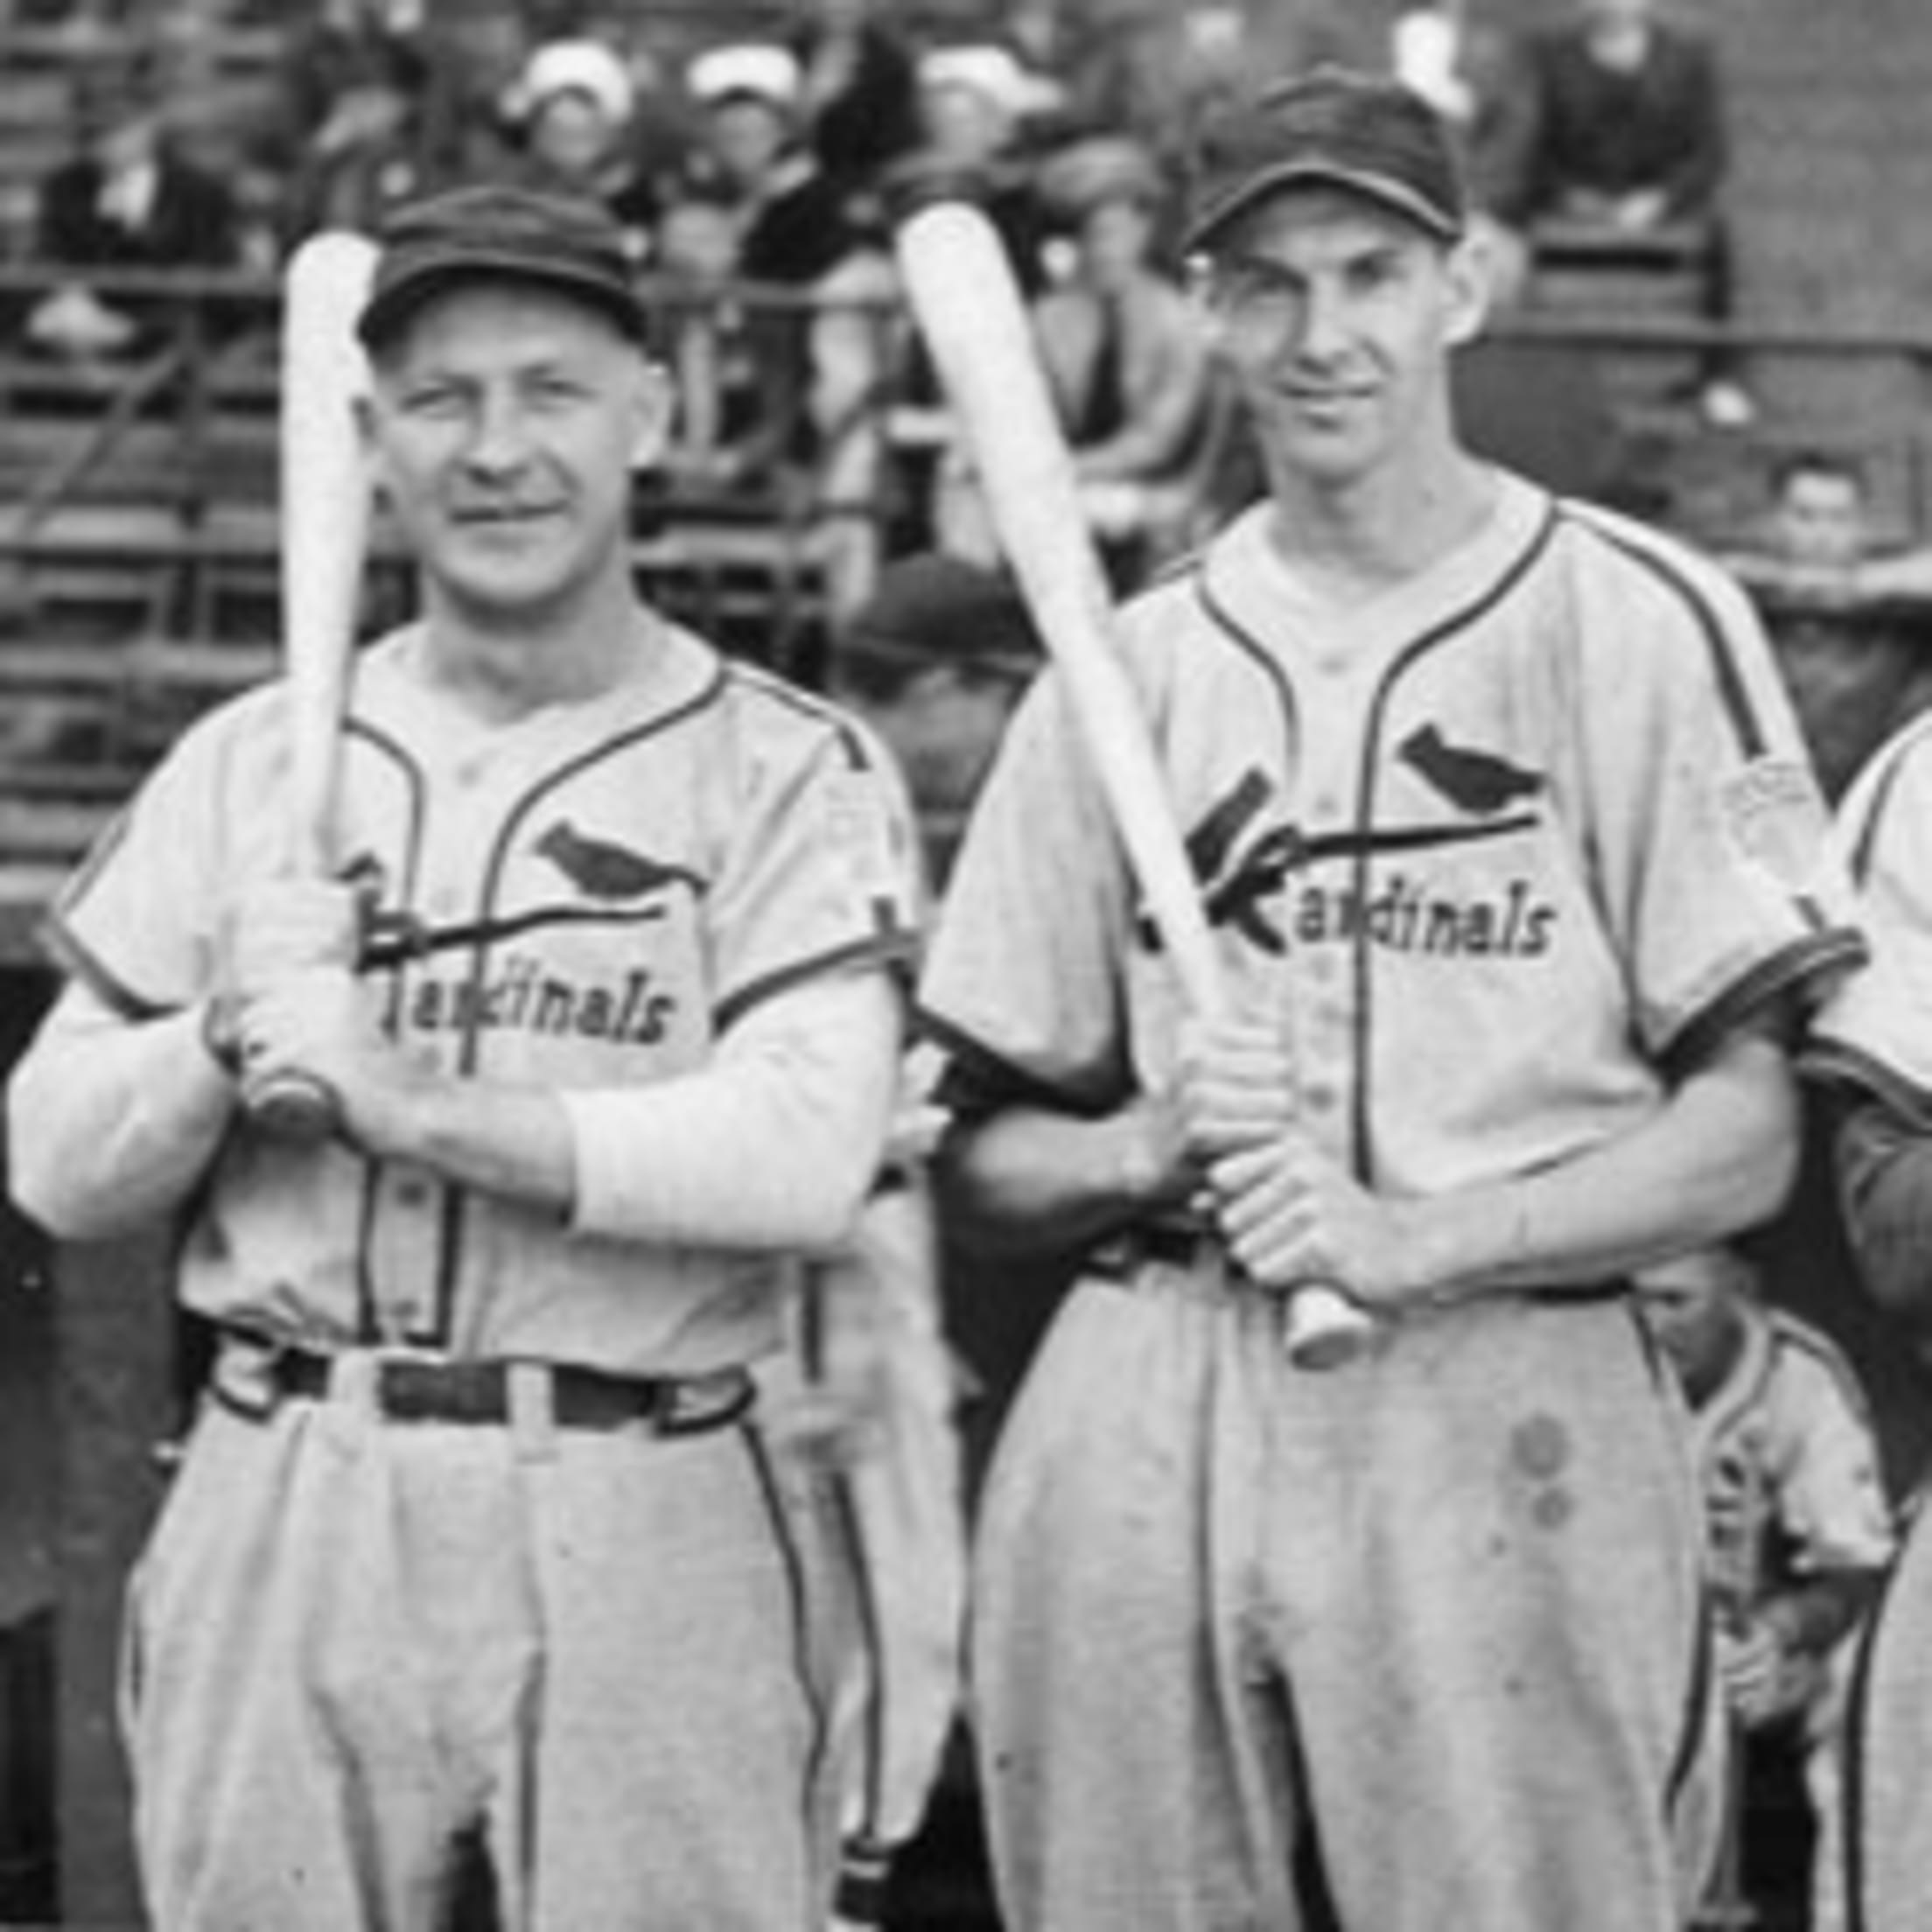 Breaking Down New York Yankees' 1912 Throwback Uniforms, News